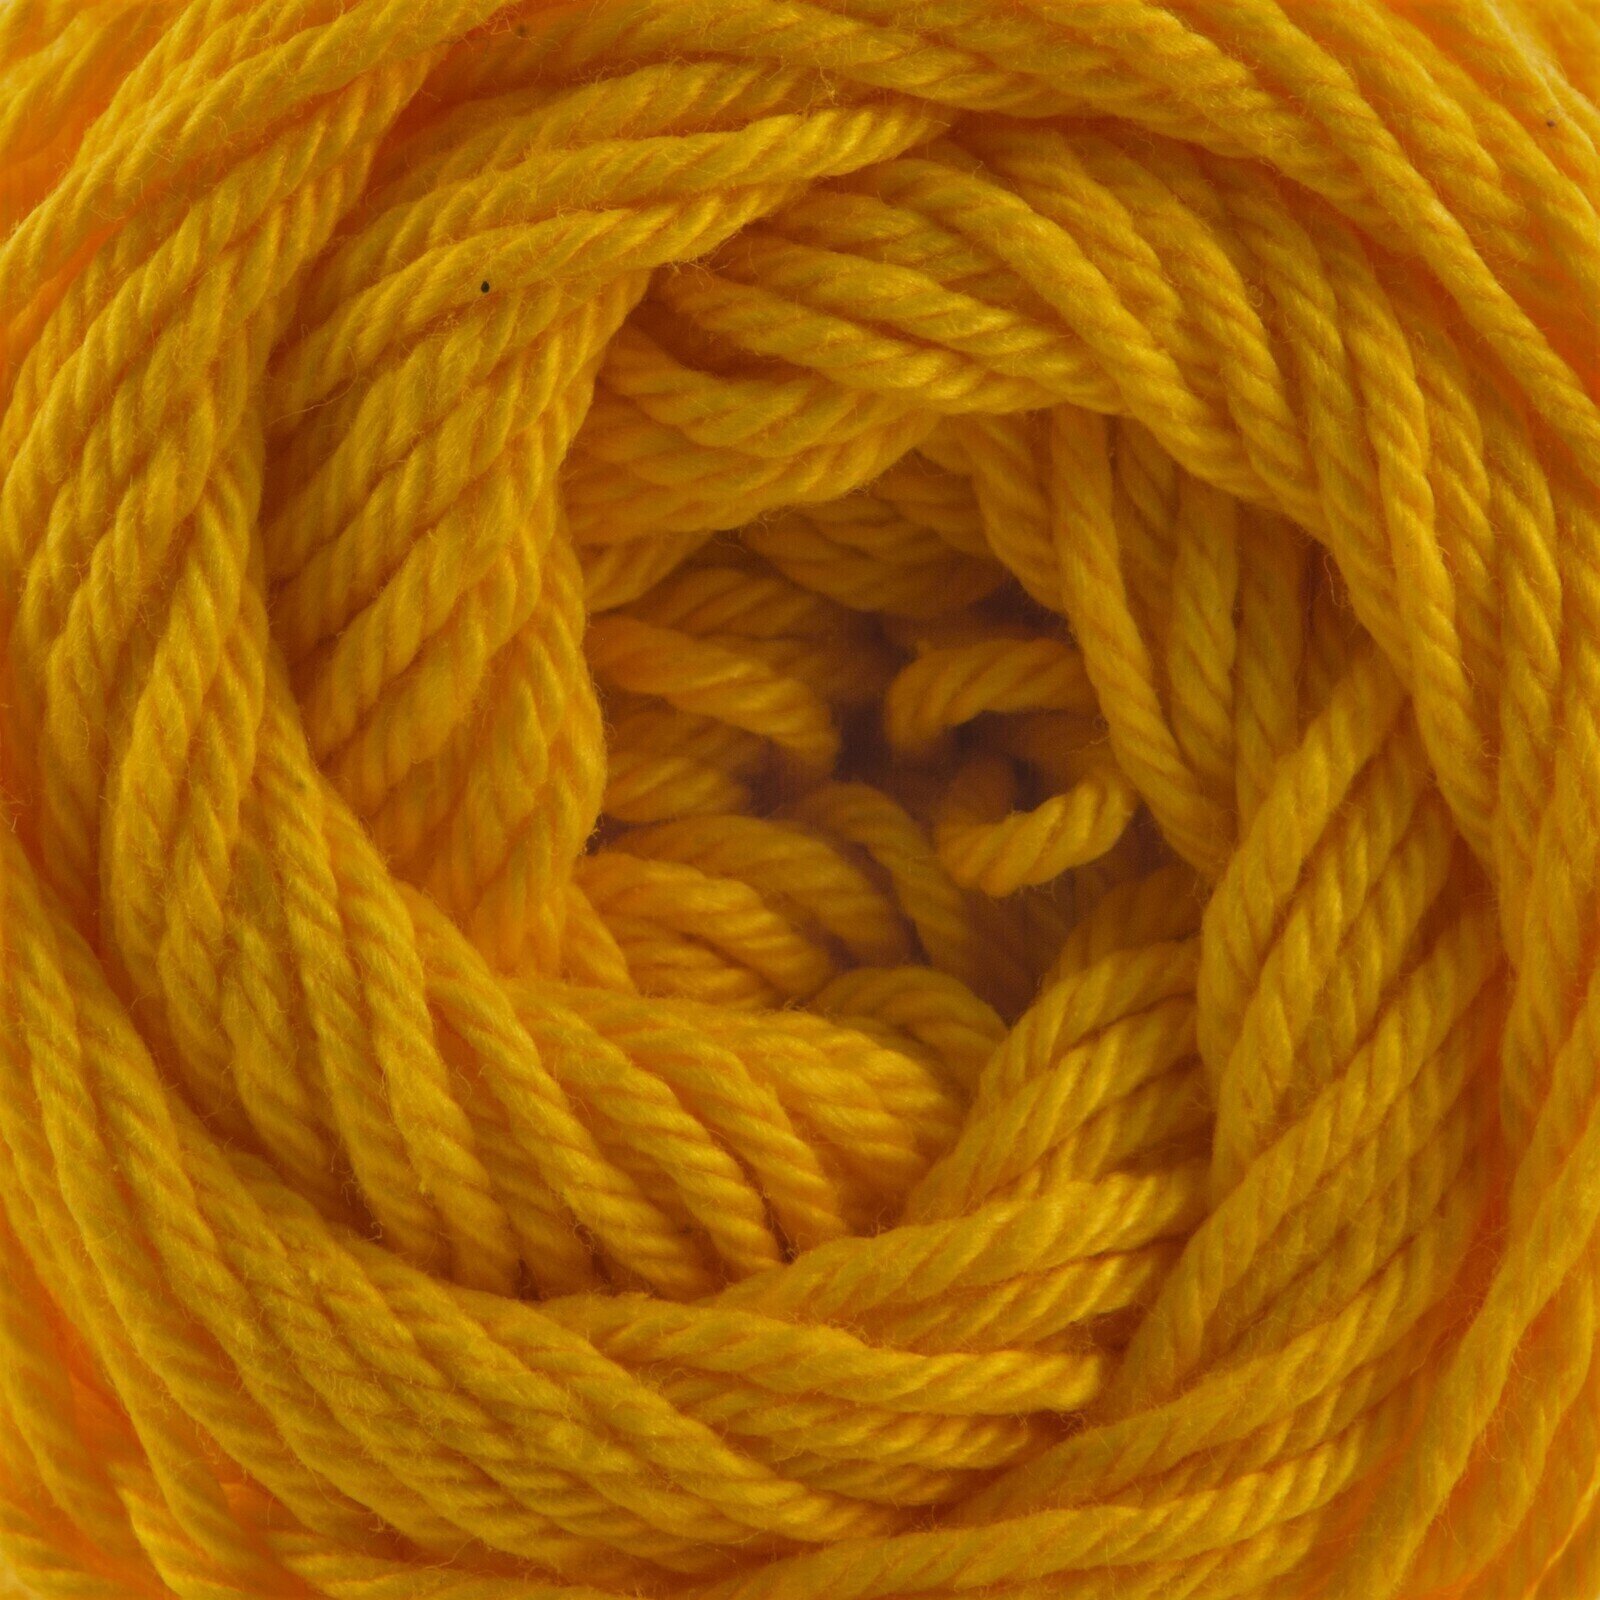 Knitting Yarn Nitarna Ceska Trebova Silva 1292 Yellow/Orange